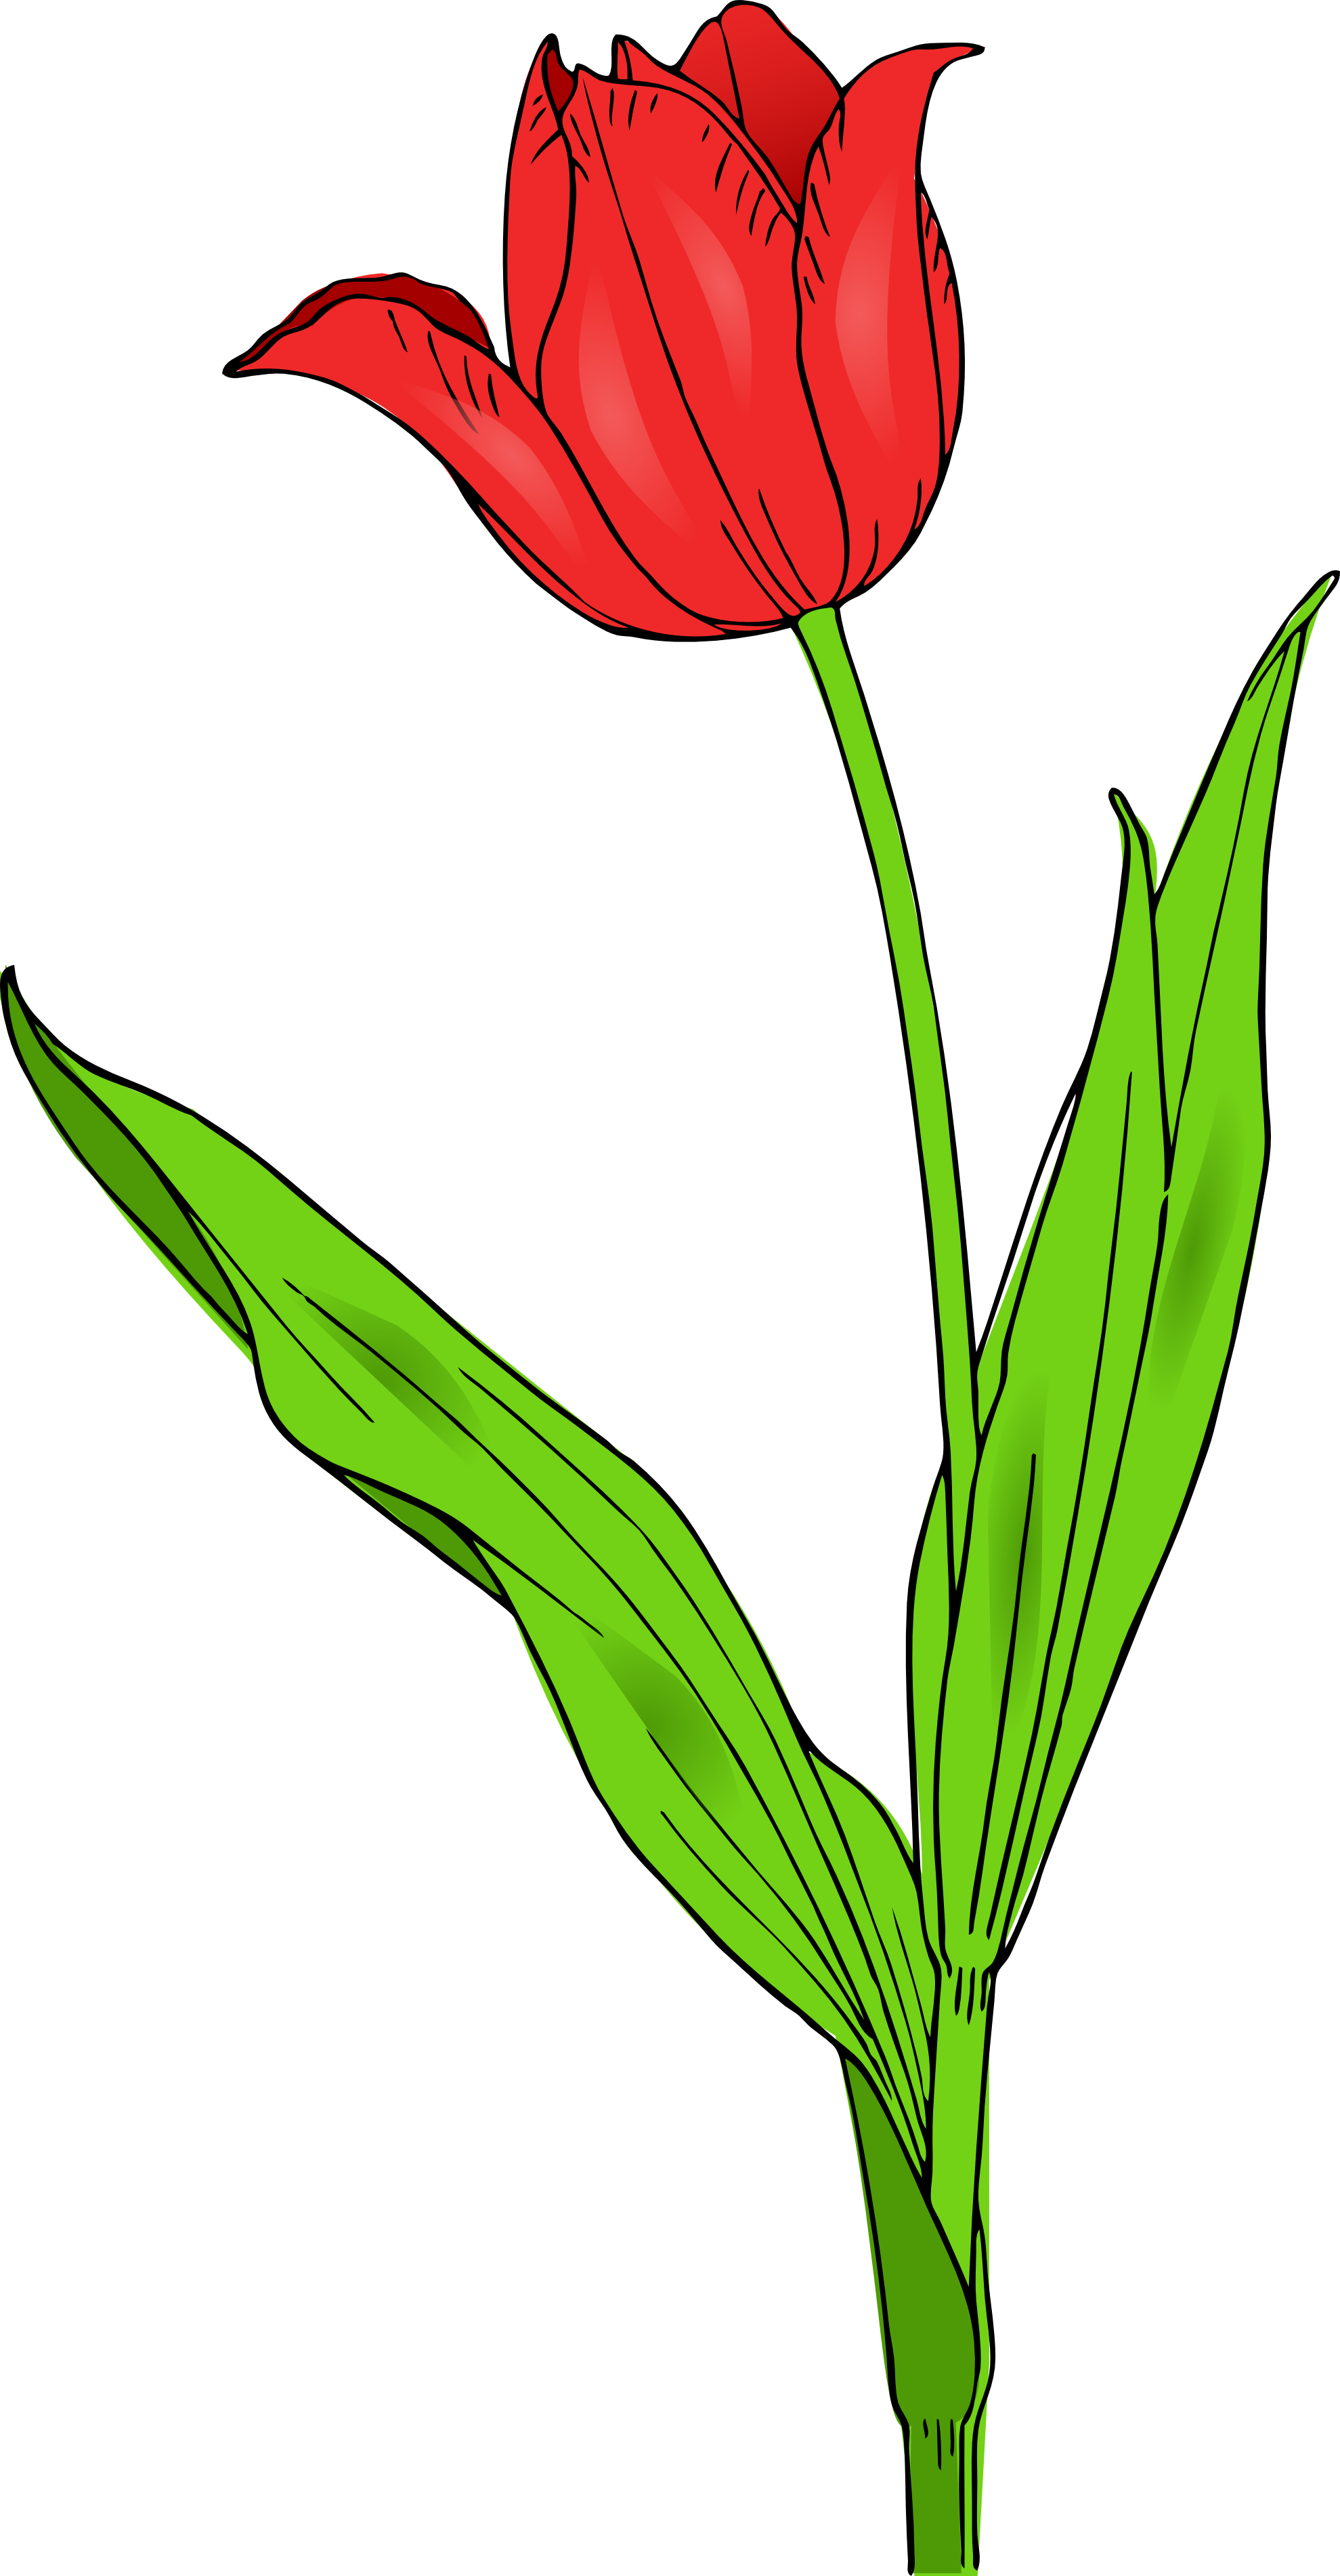 Garland clipart cartoon. Free tulip image download